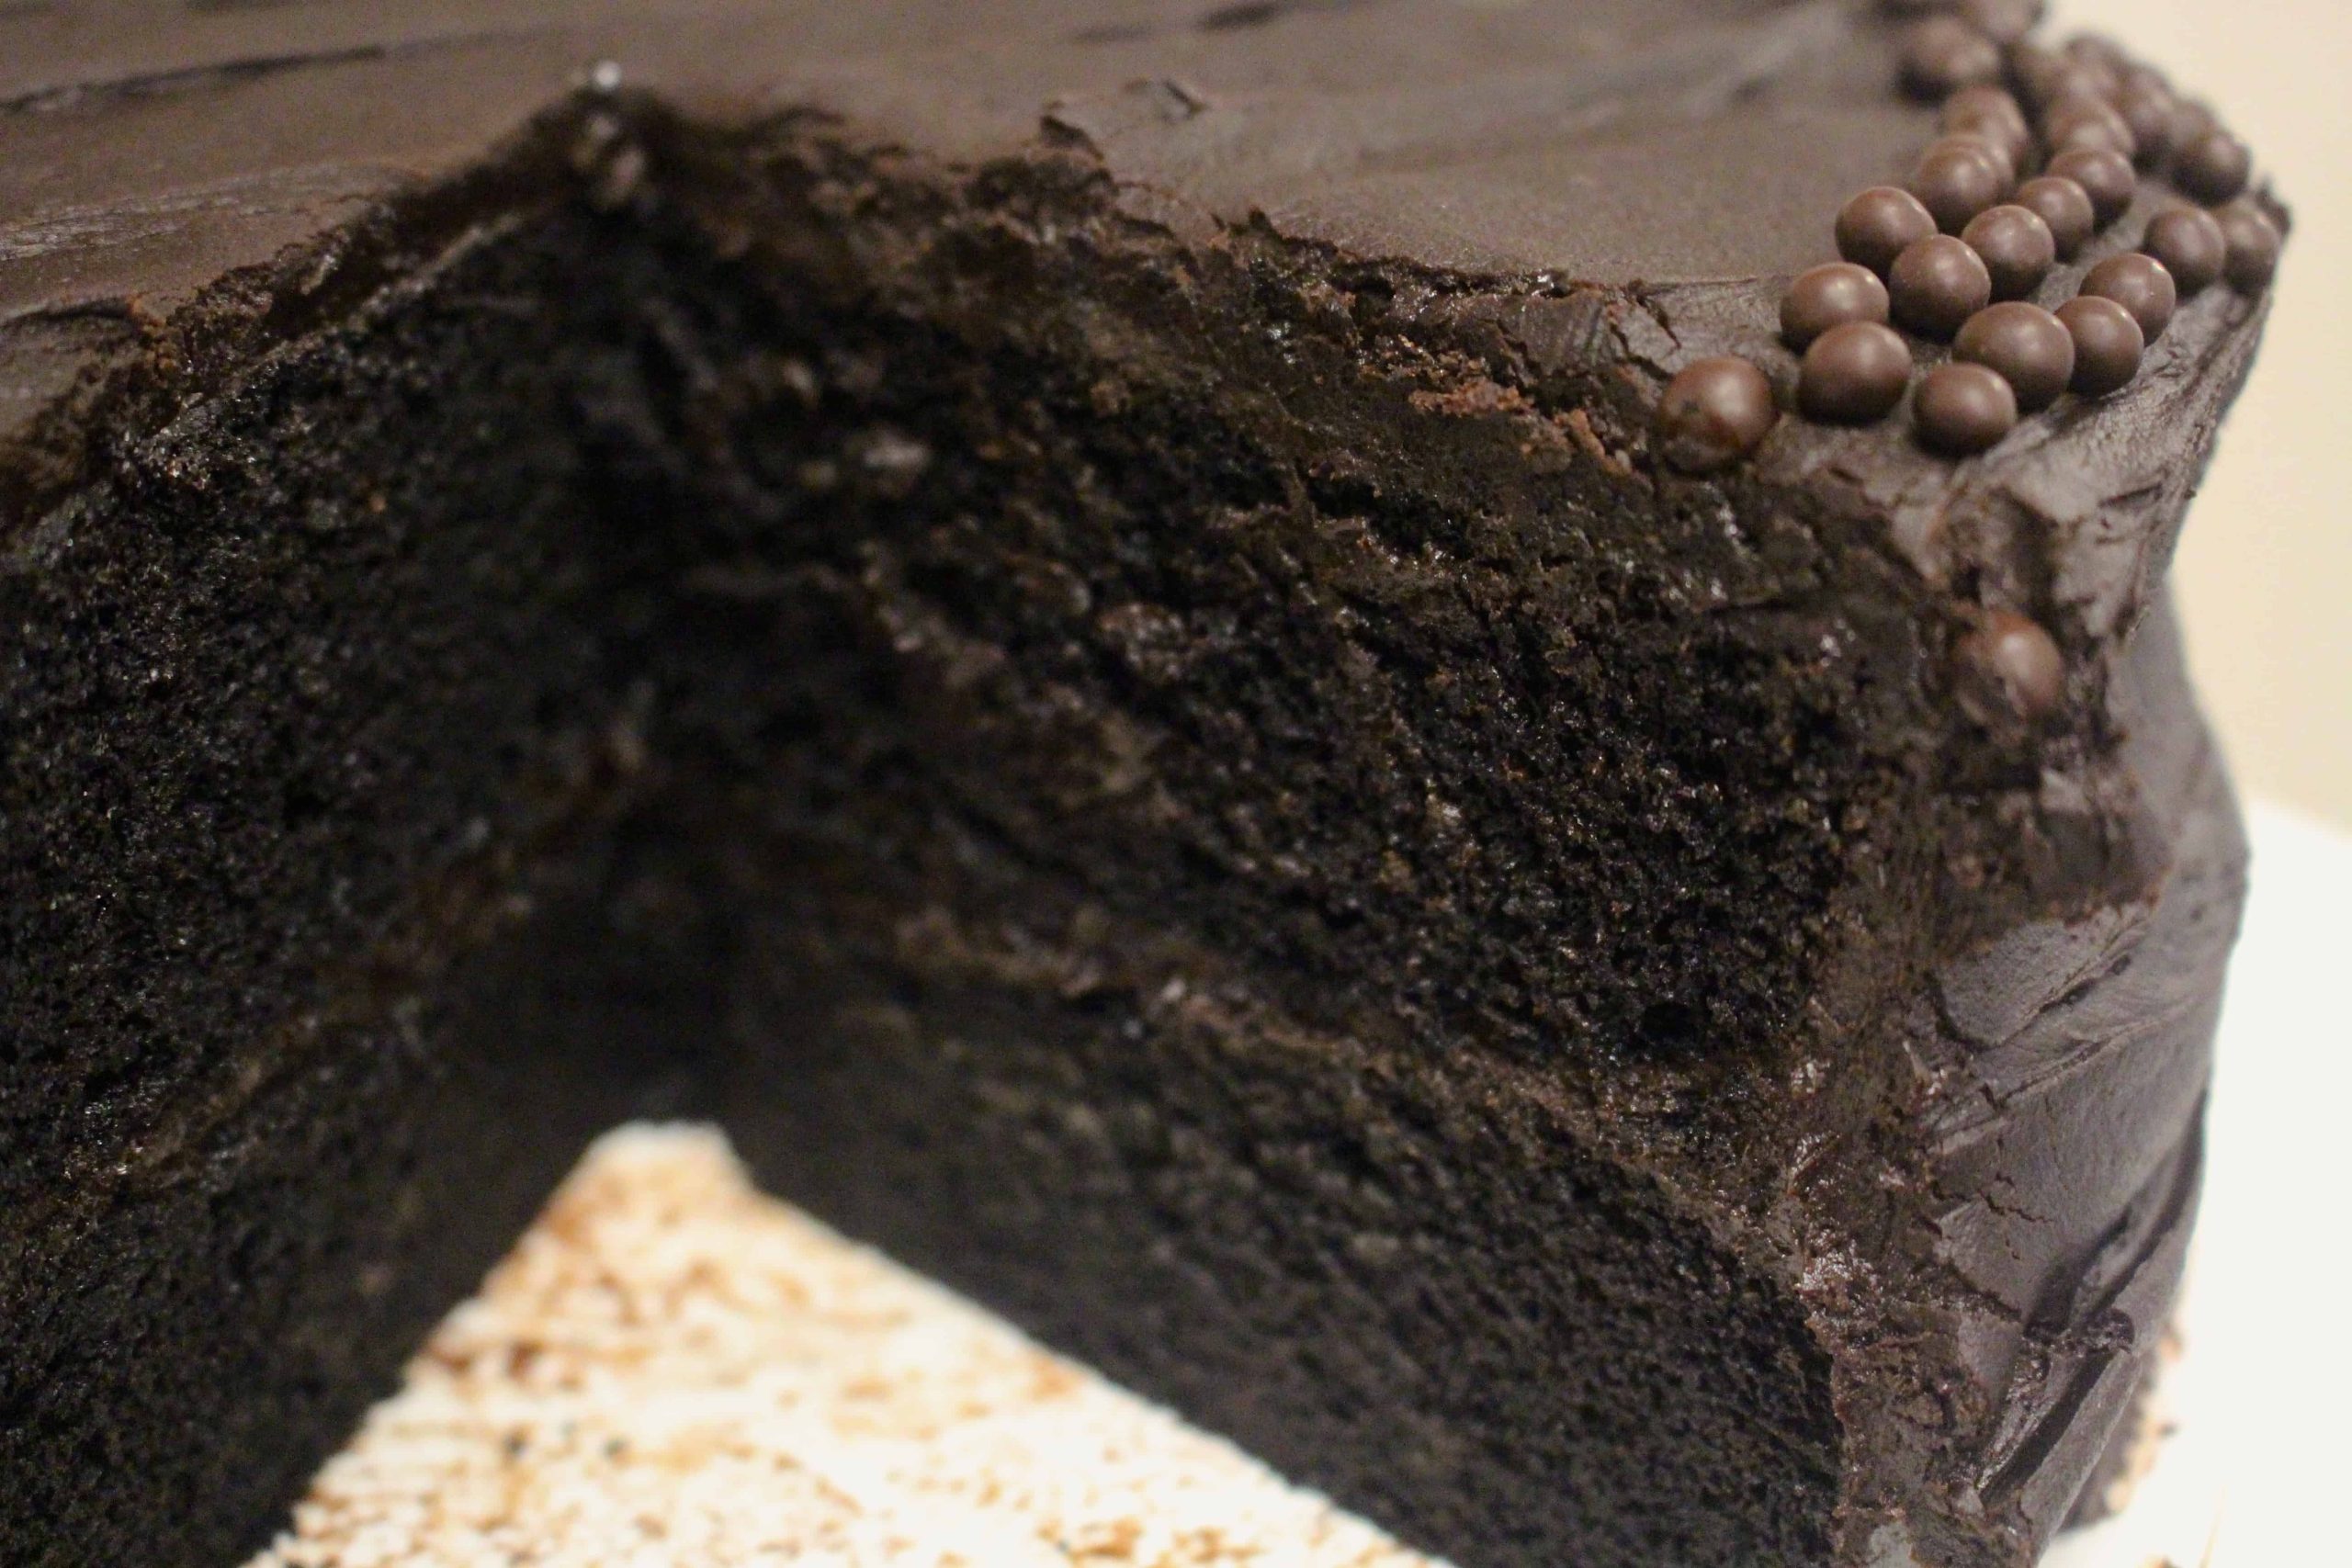 New Oreo flavor: 'Blackout Cake' Oreos have 2 chocolate creme layers